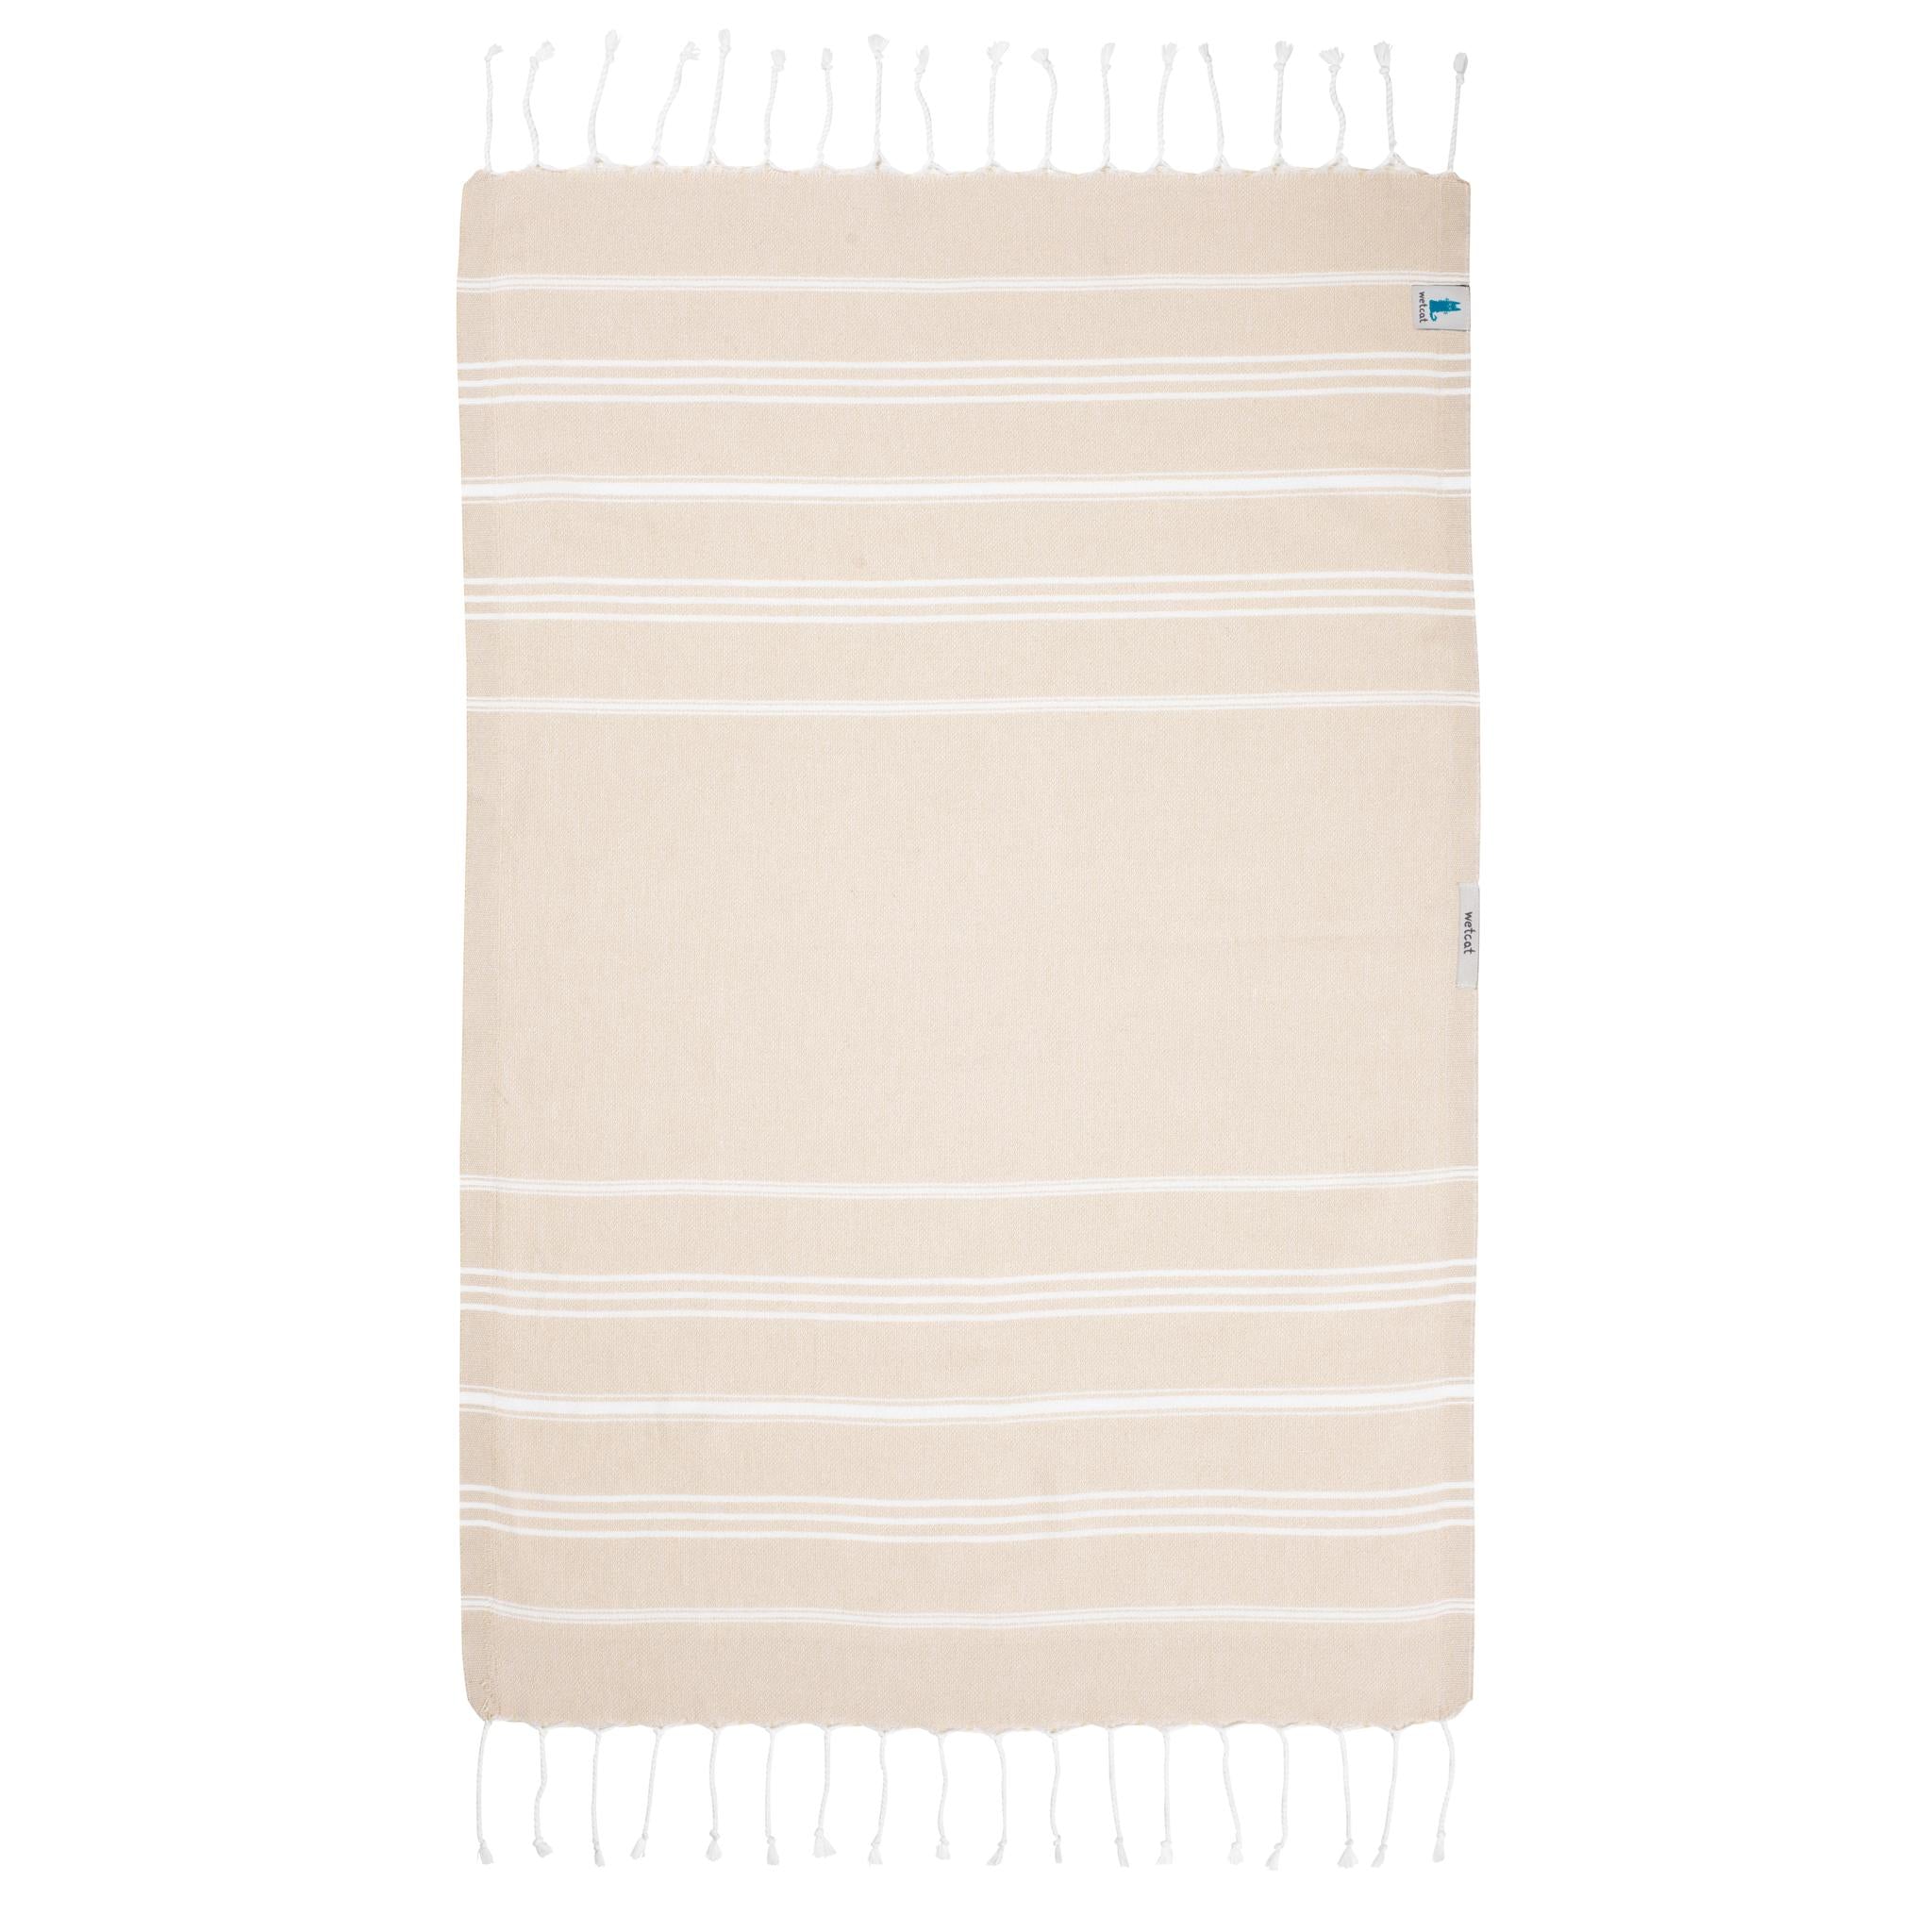  WETCAT Turkish Hand Towels with Hanging Loop (20 x 30